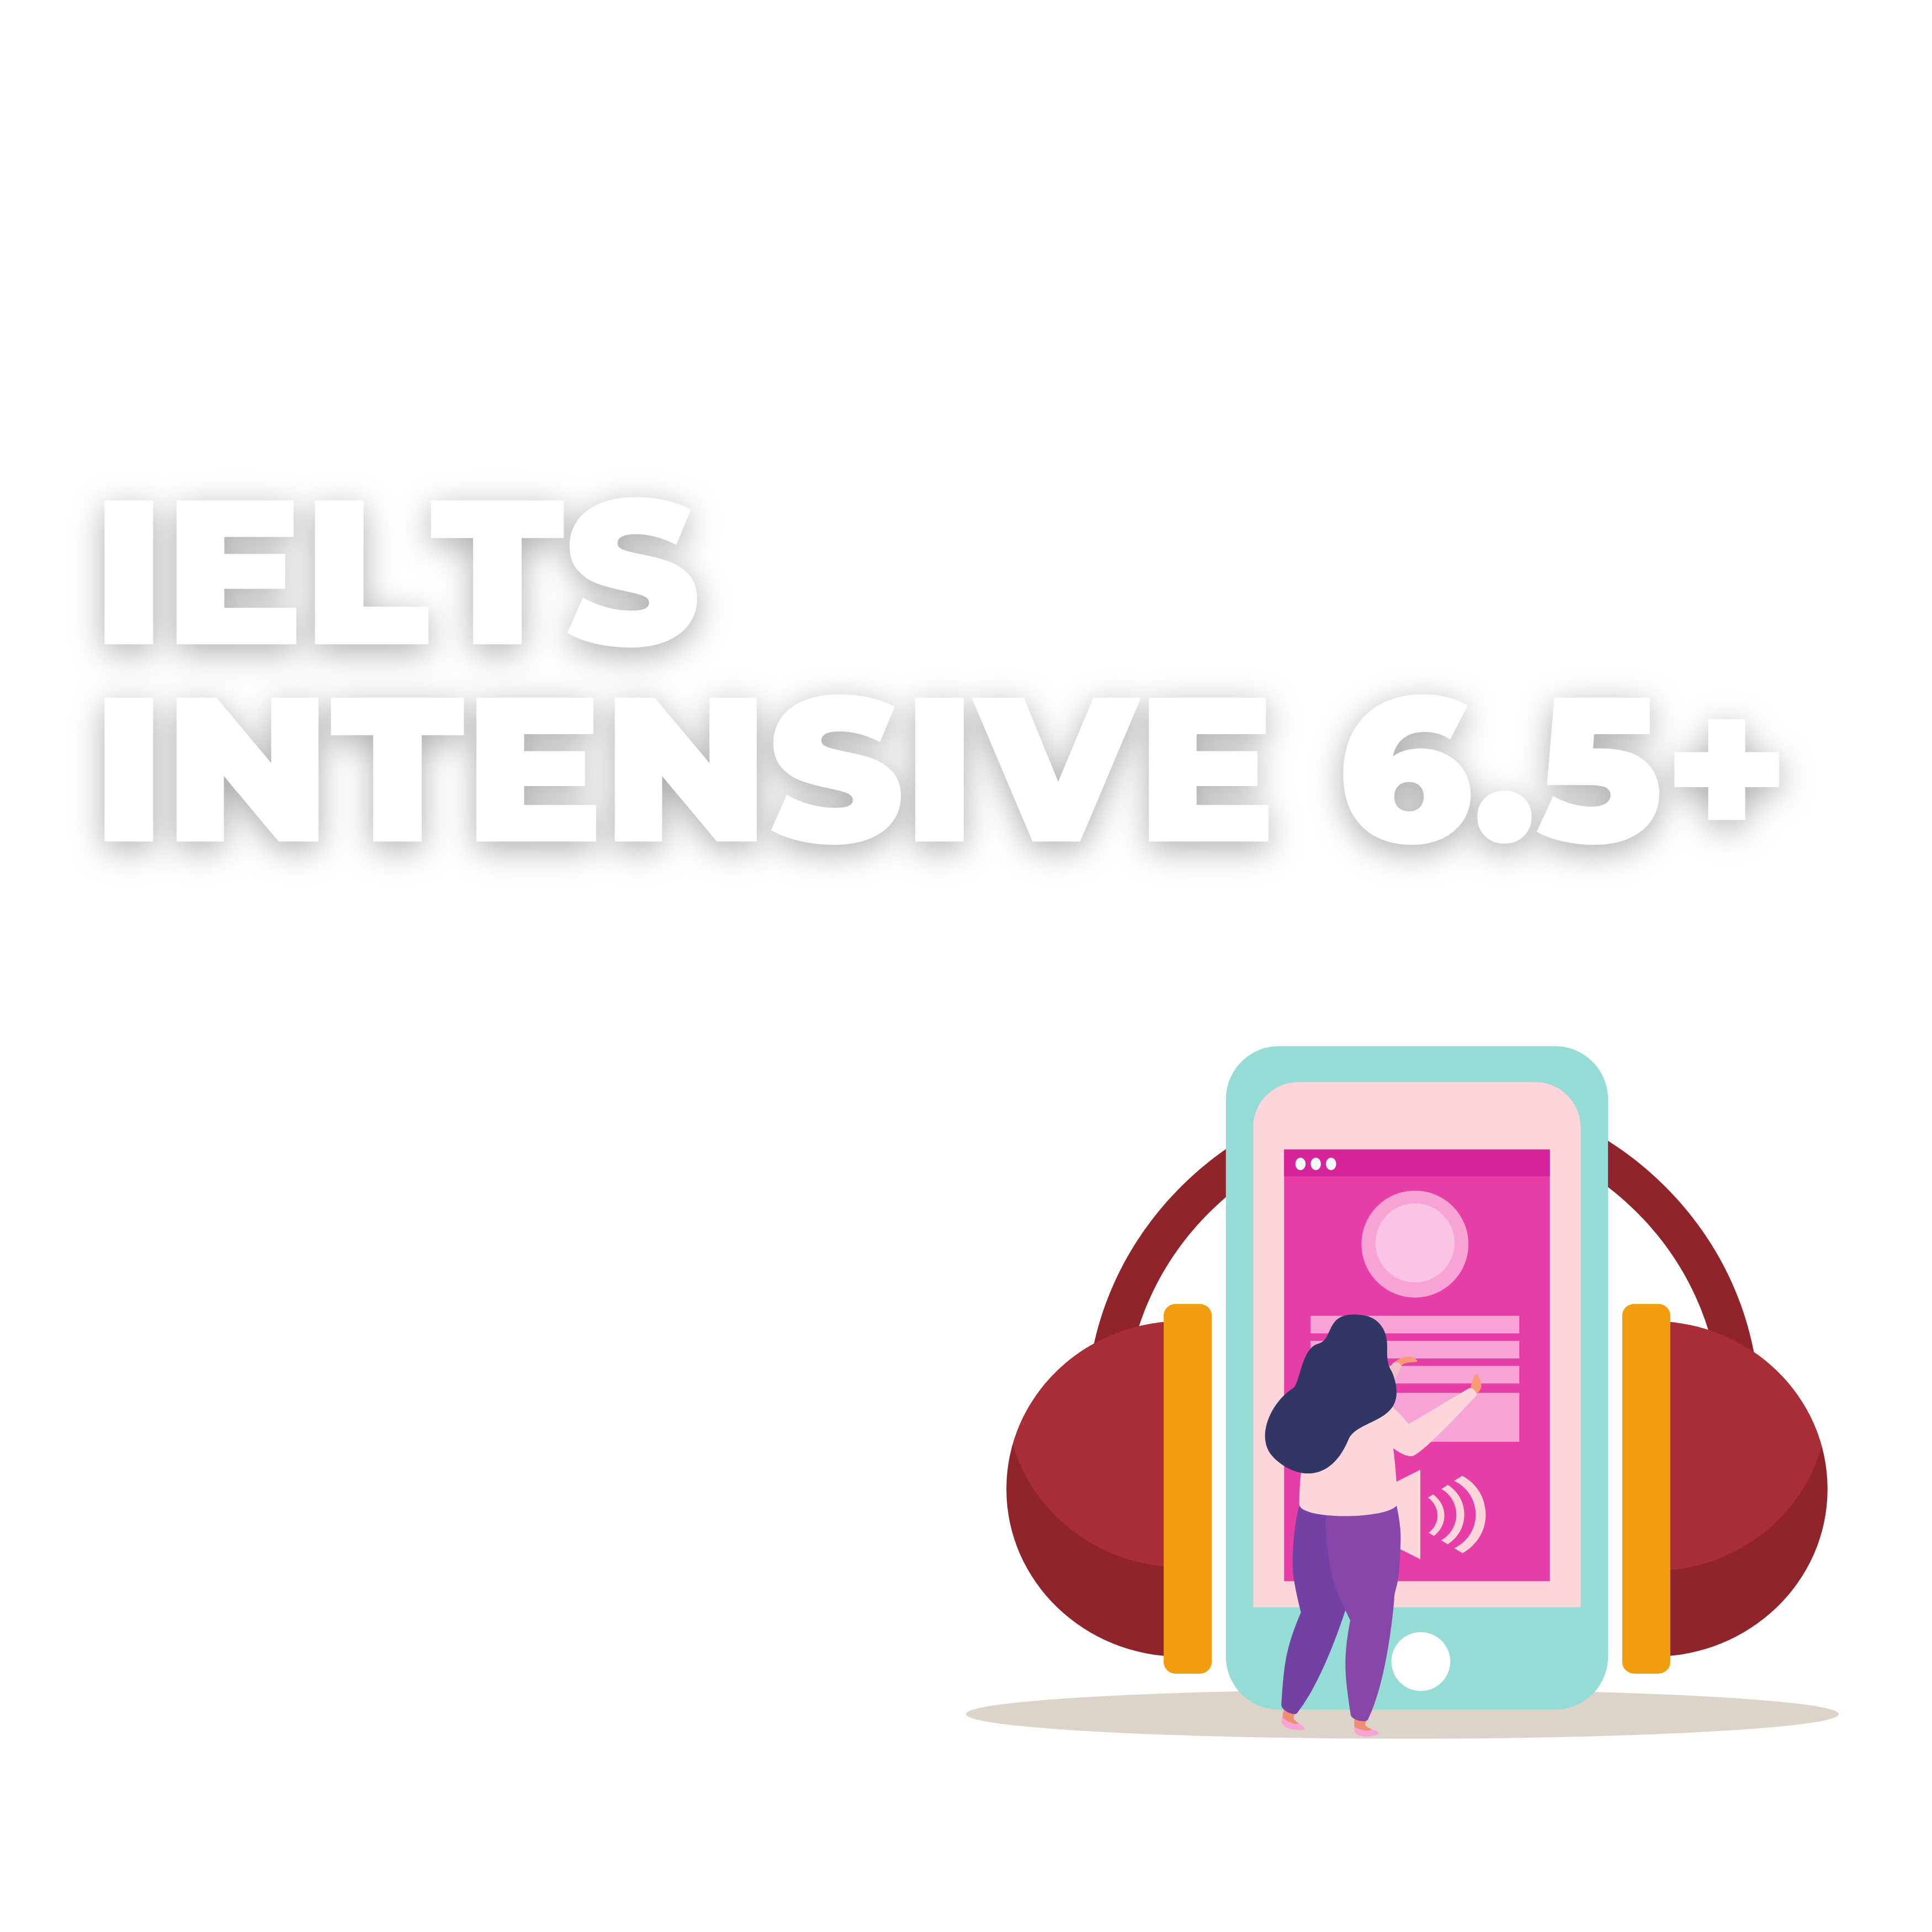 IELTS INTENSIVE 6.5+